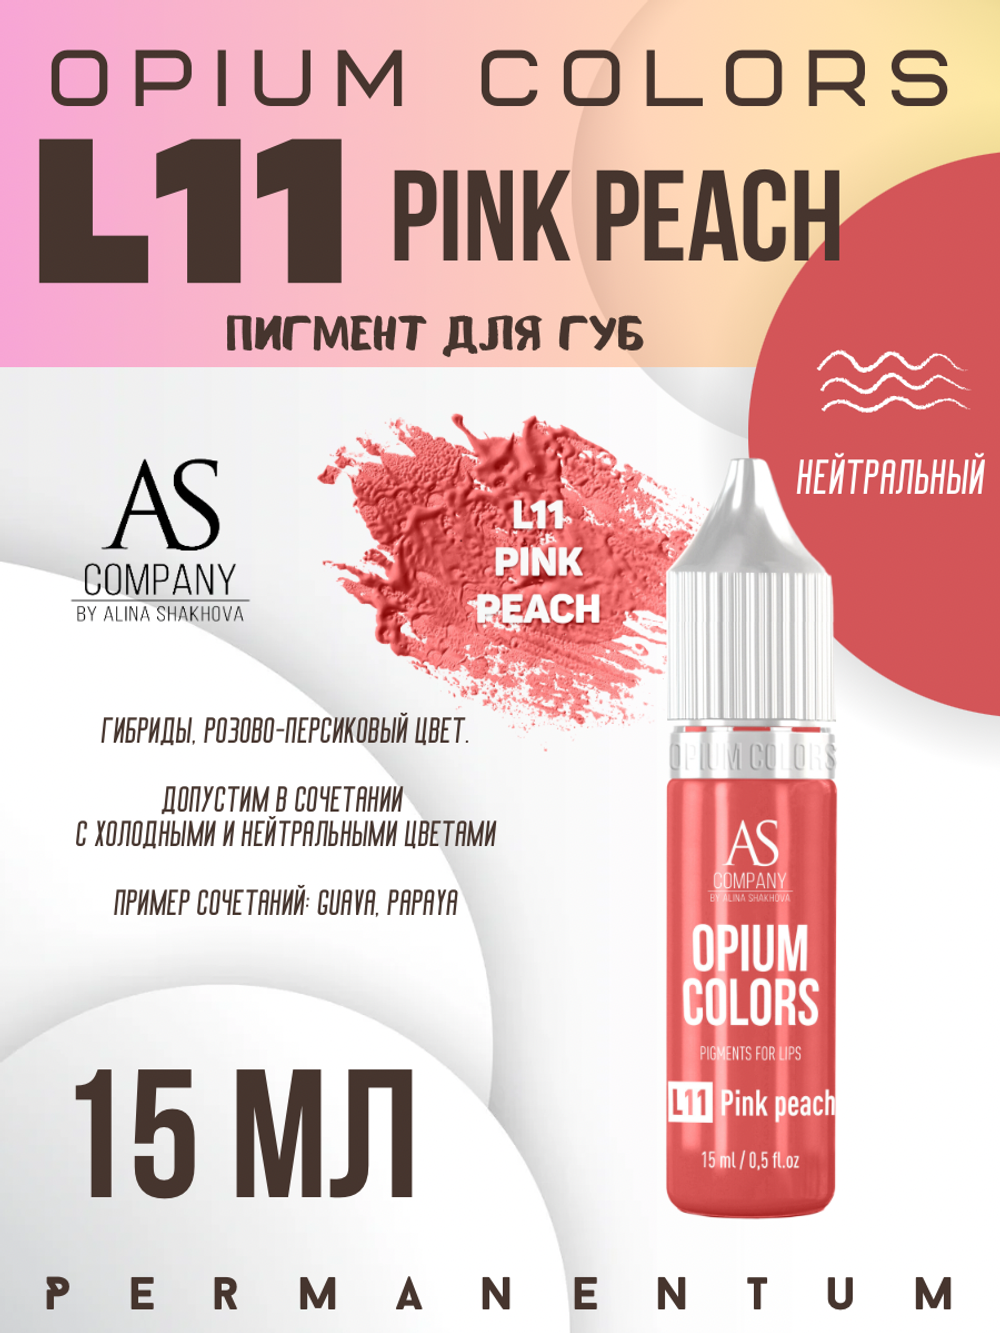 L11 PINK PEACH пигмент для губ TM AS-Company OPIUM COLORS